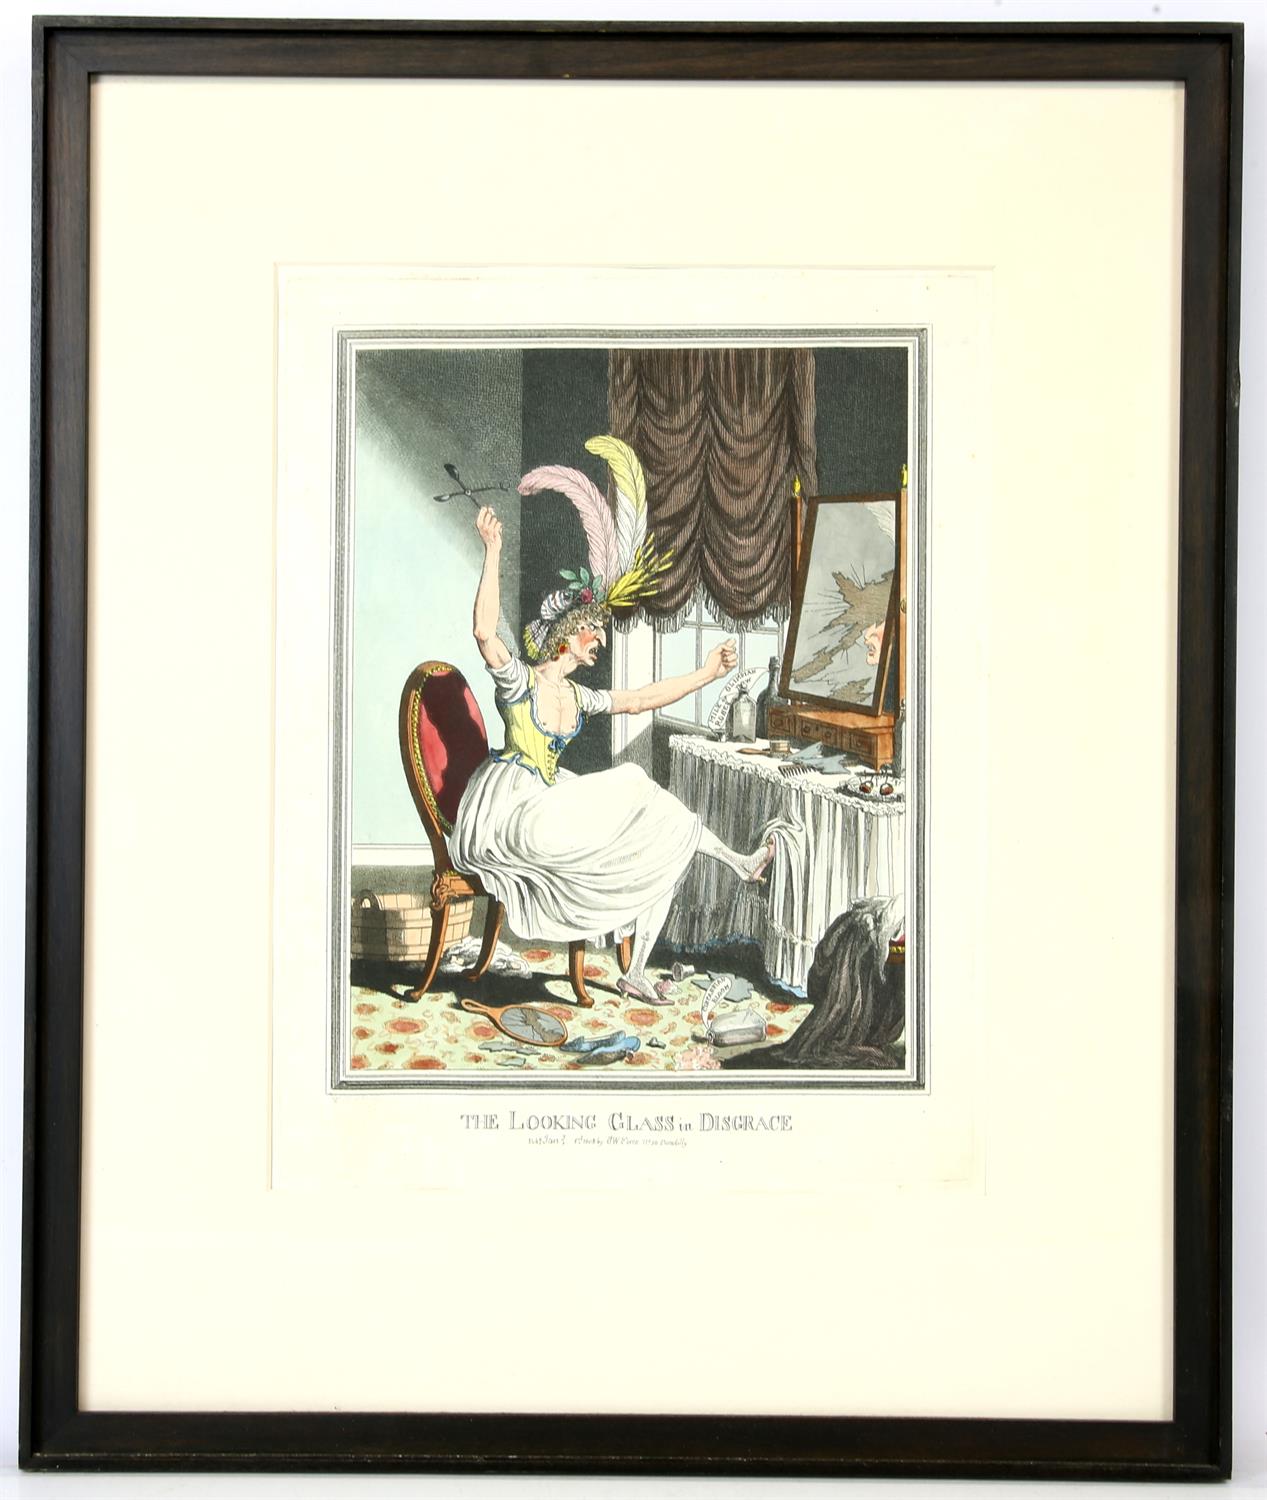 Prints and Pictures including Josephine Baker framed print, Malibu Film Festival poster, - Image 2 of 5